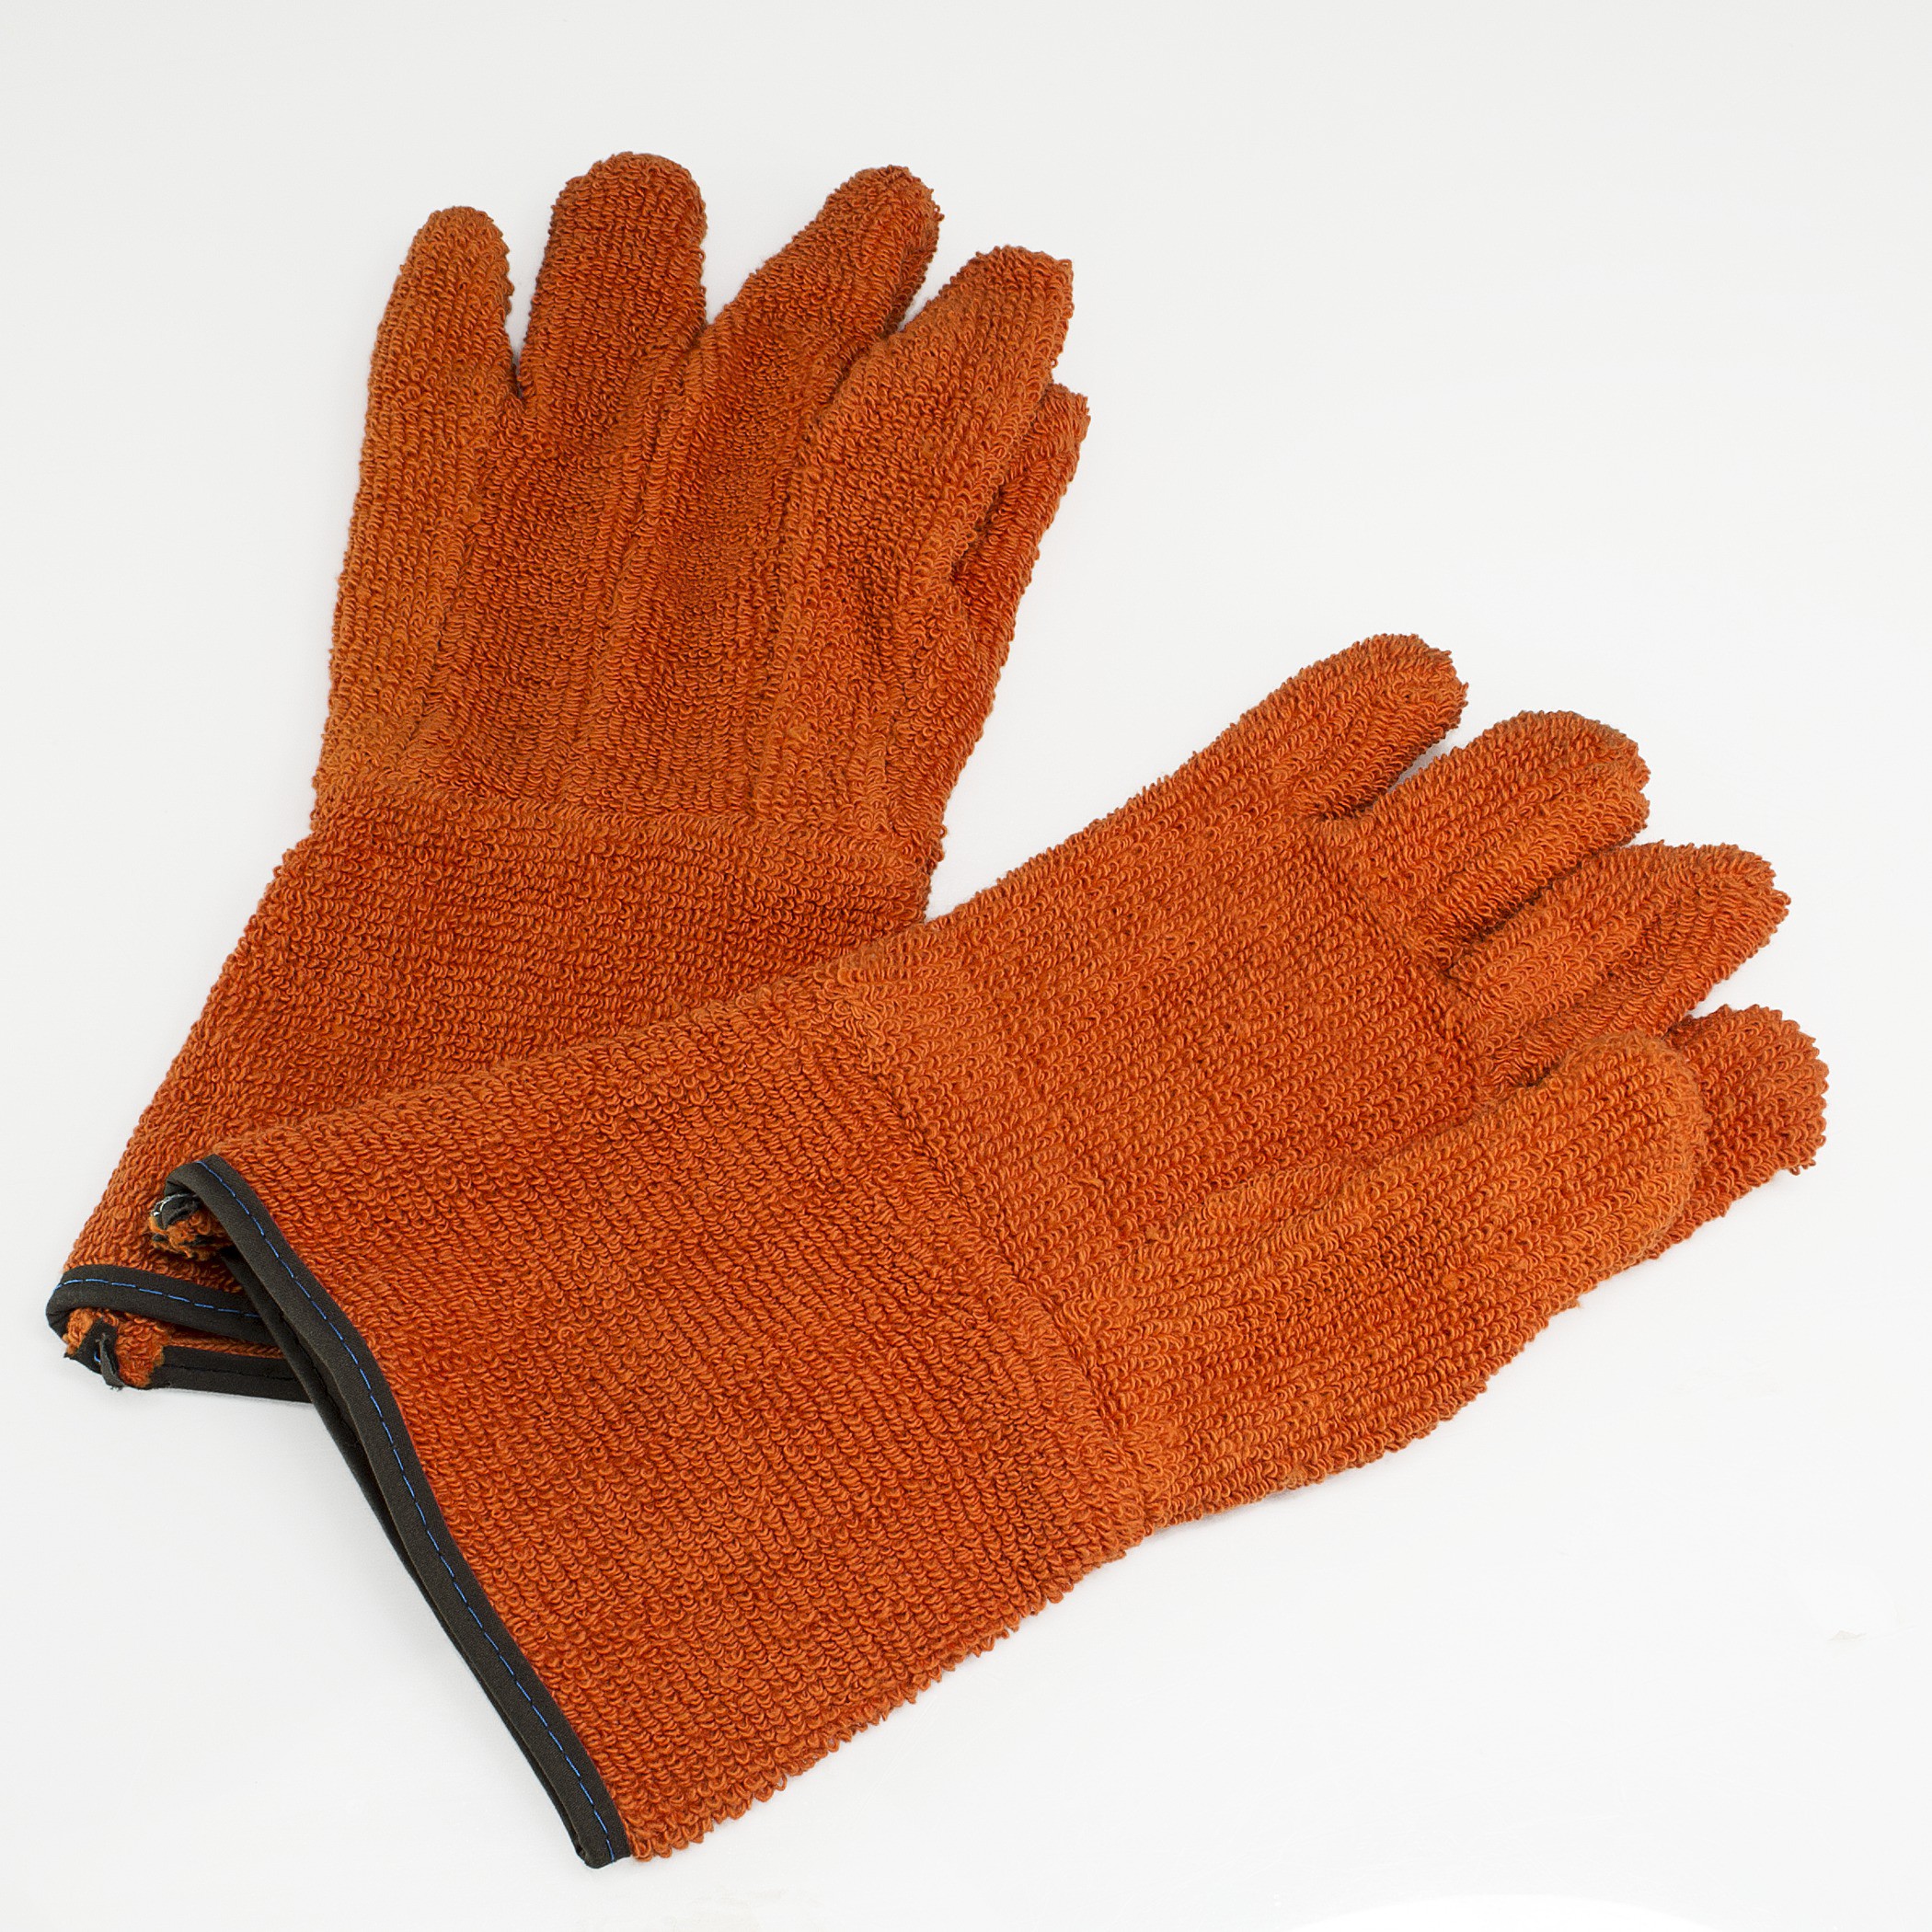 Orange Heat-Resistant Gloves